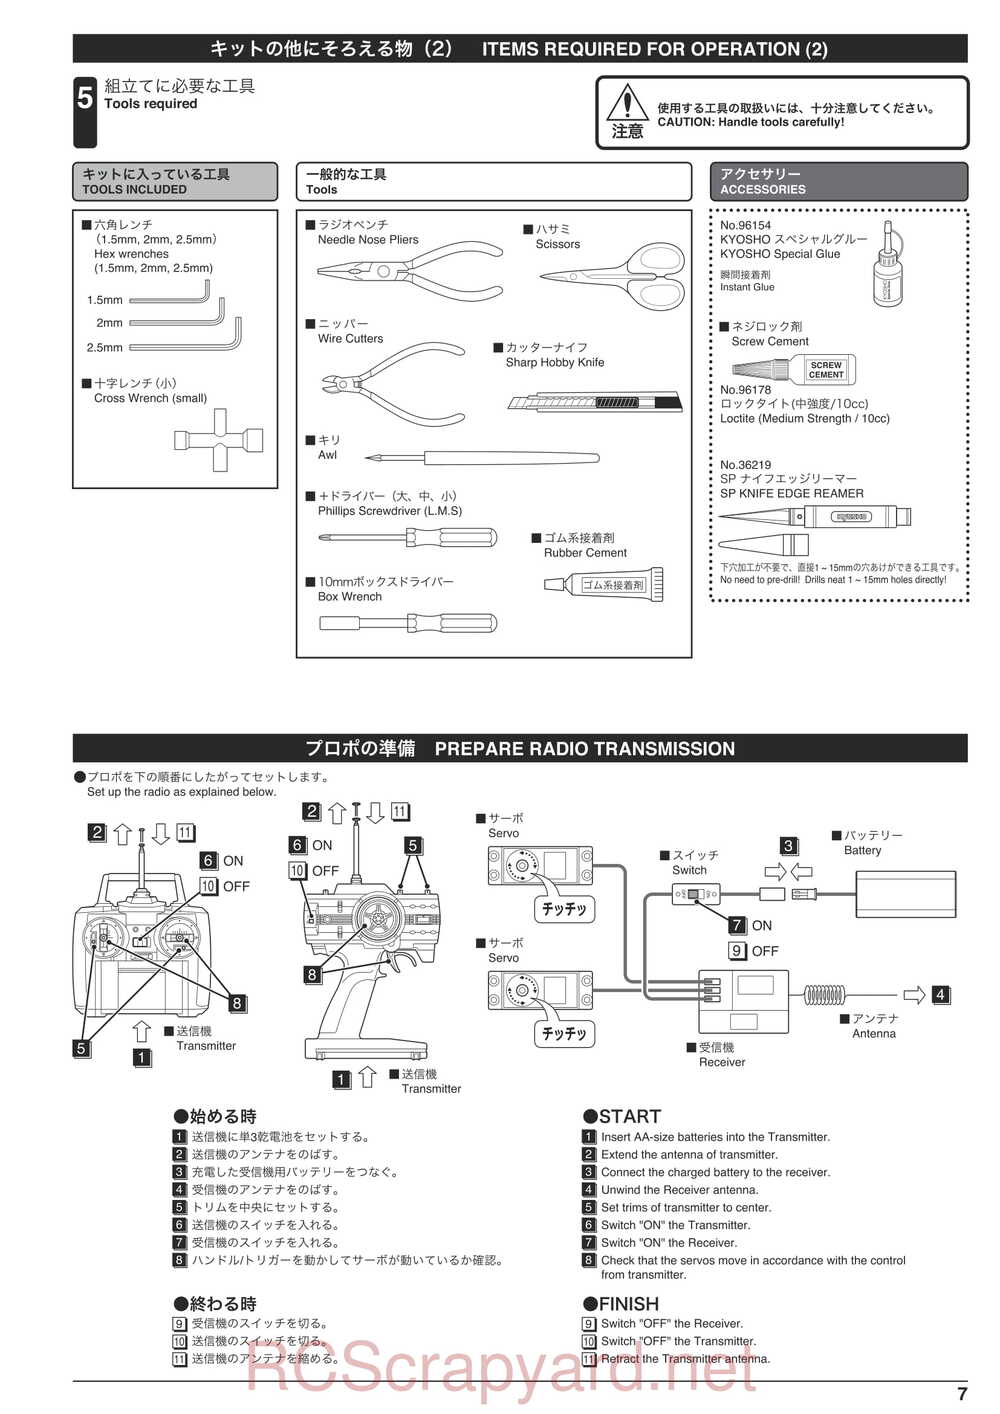 Kyosho - 31007 - KF01 - Manual - Page 07